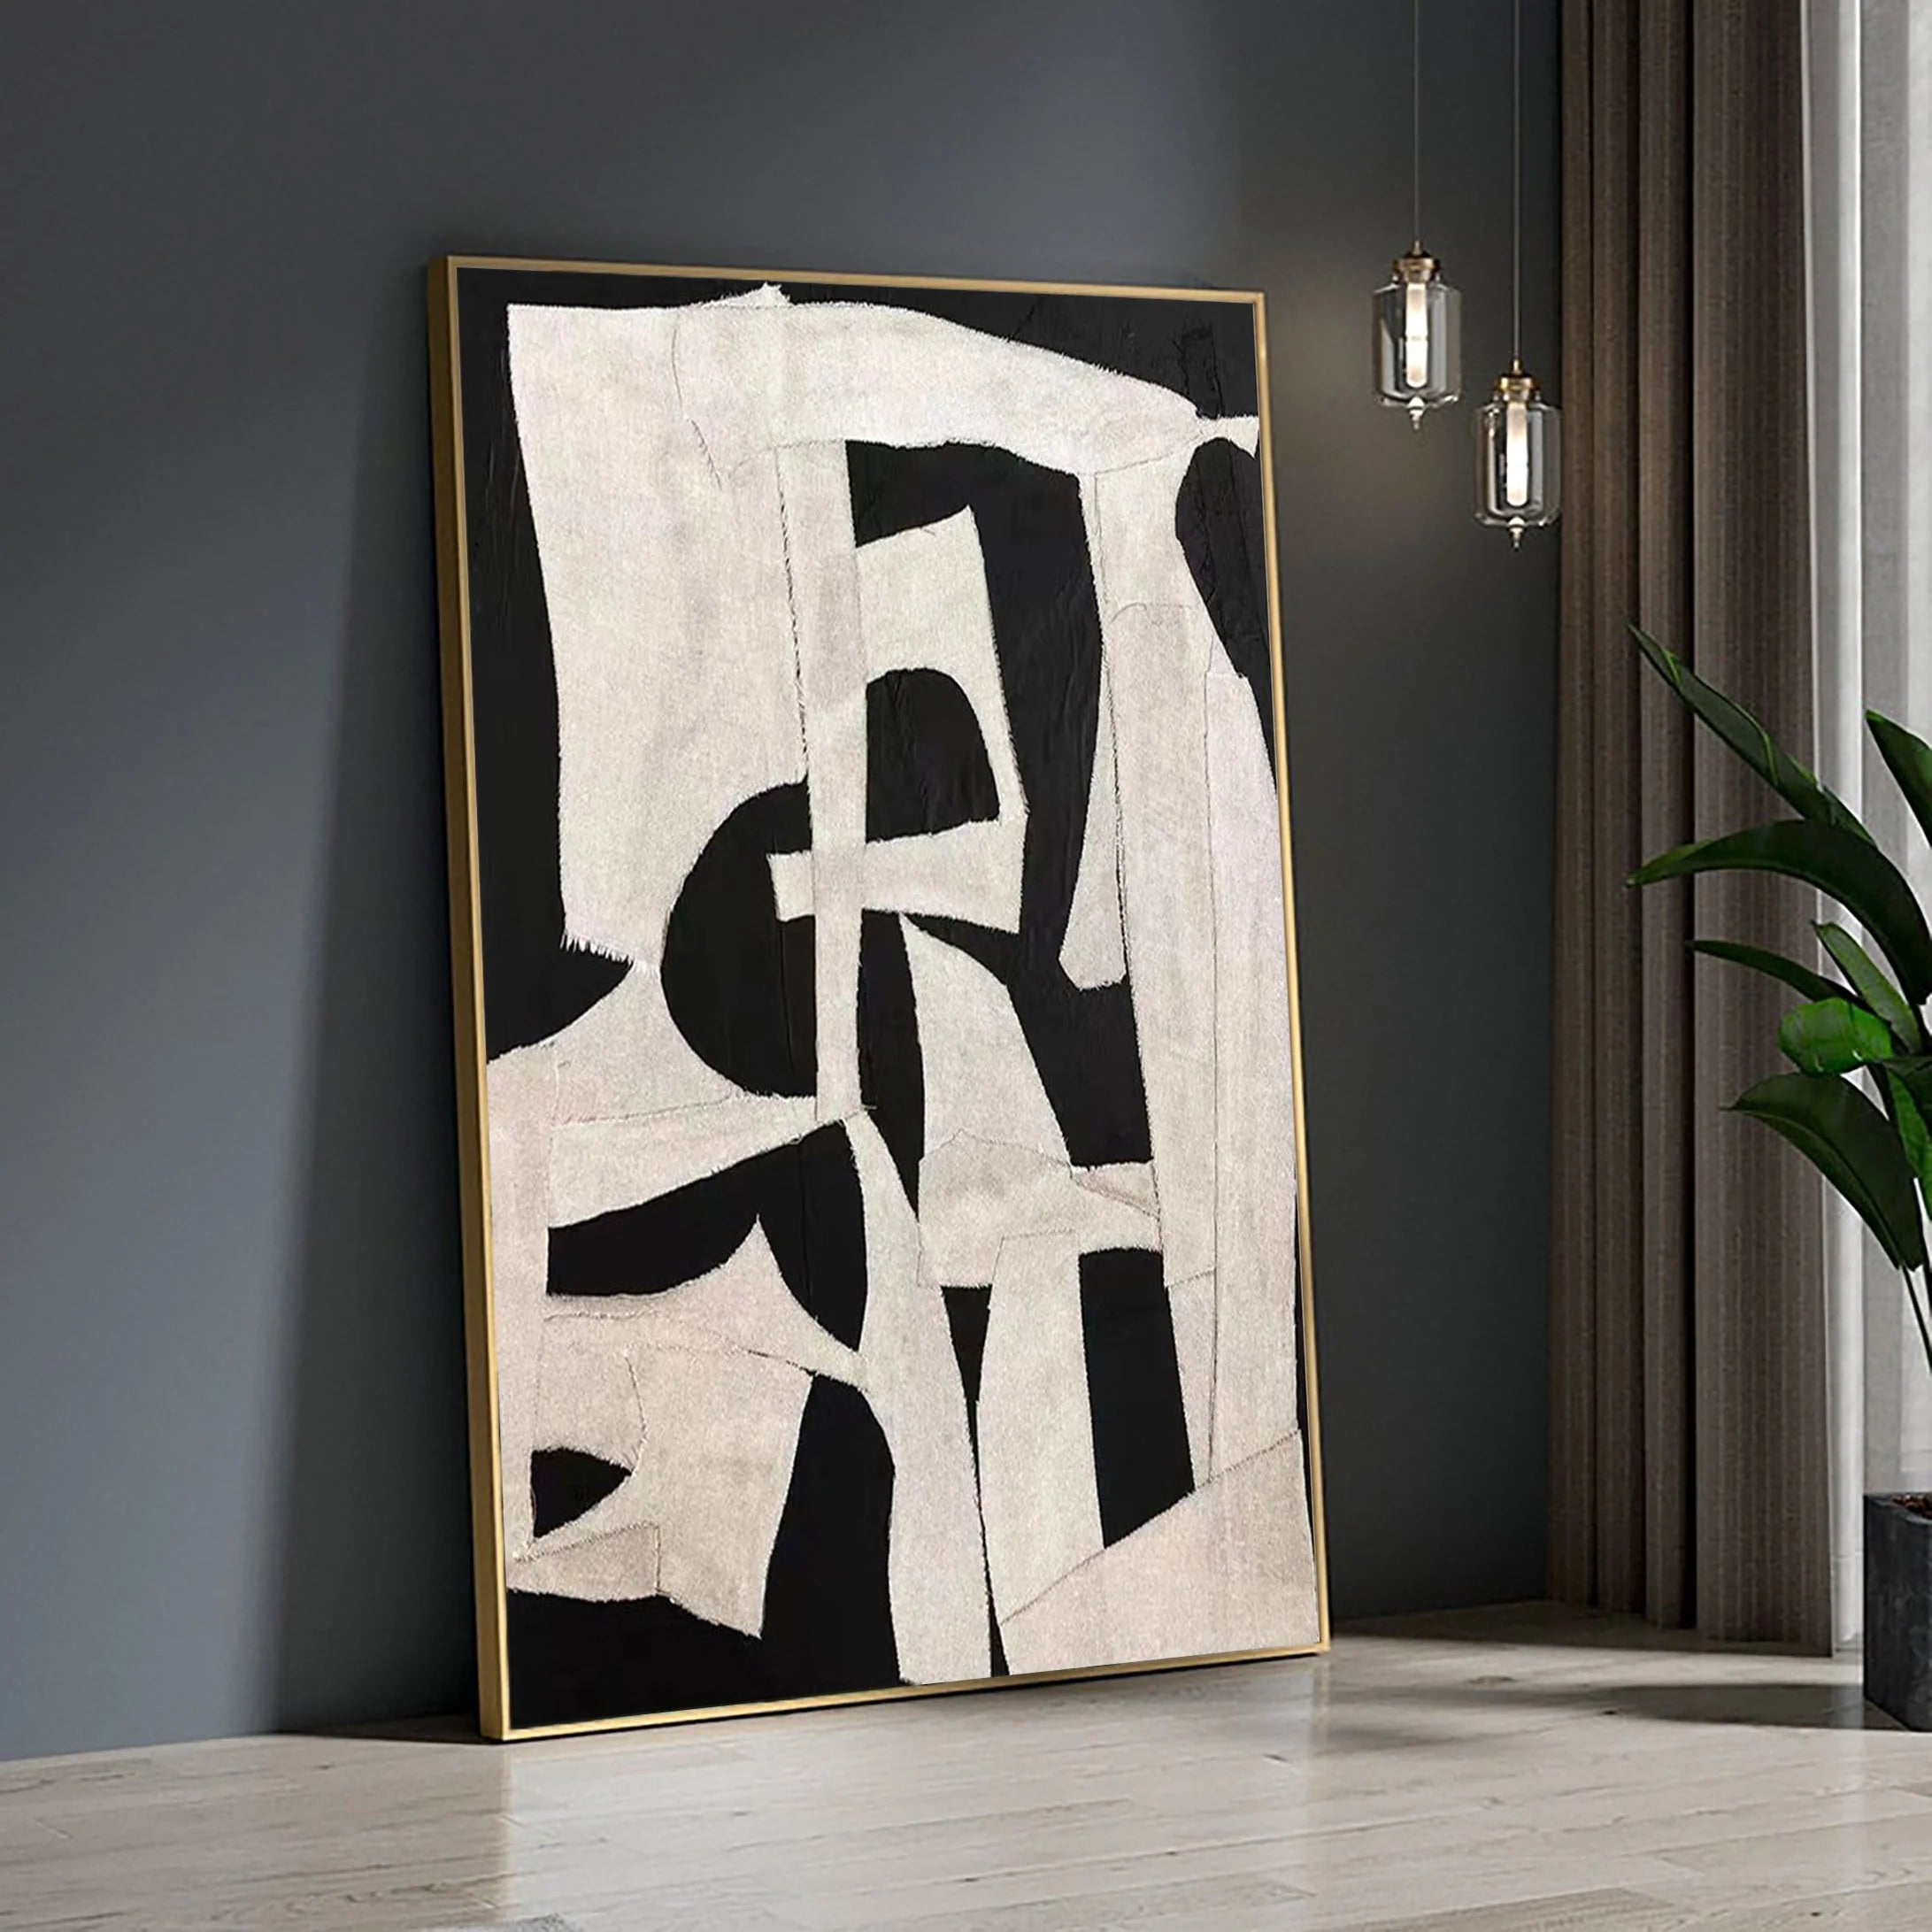 Geometric Abstract Wabi Sabi Artwork Large Beige 3D Textured Painting on Canvas